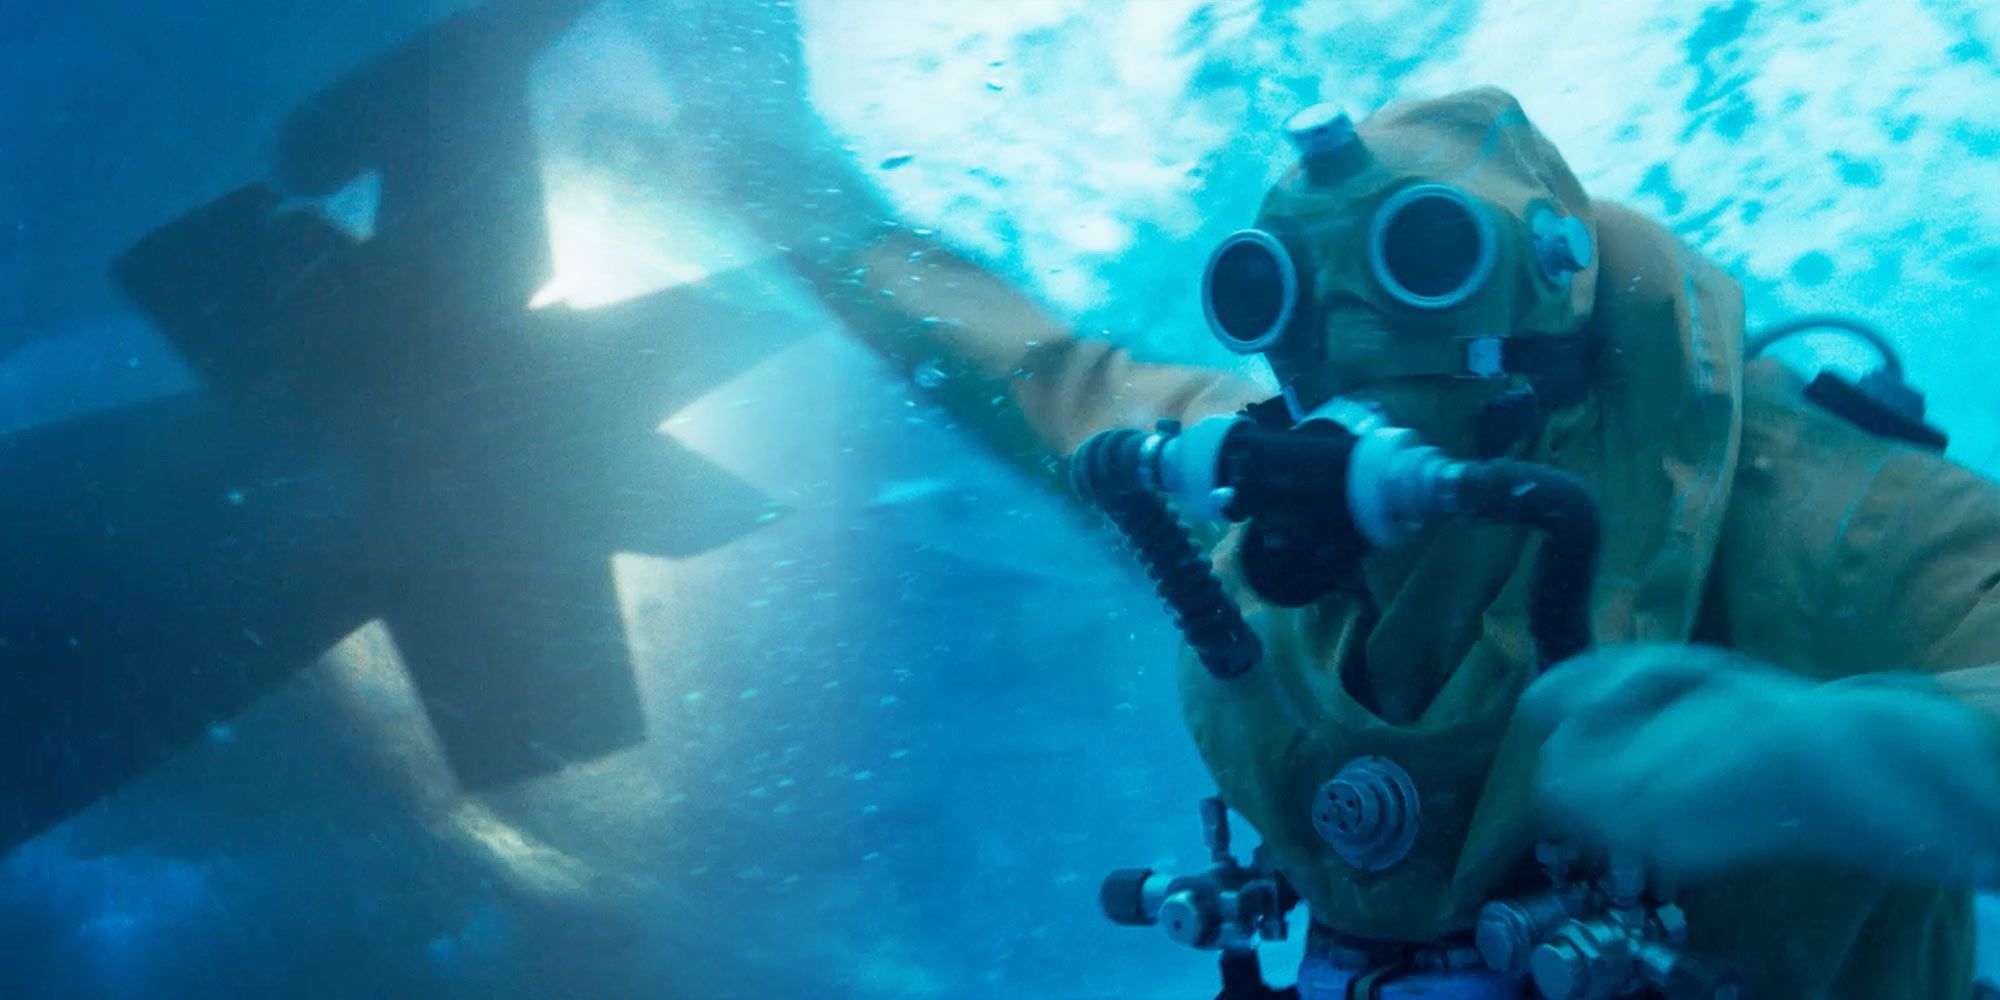 mission impossible 7 underwater submarine scene